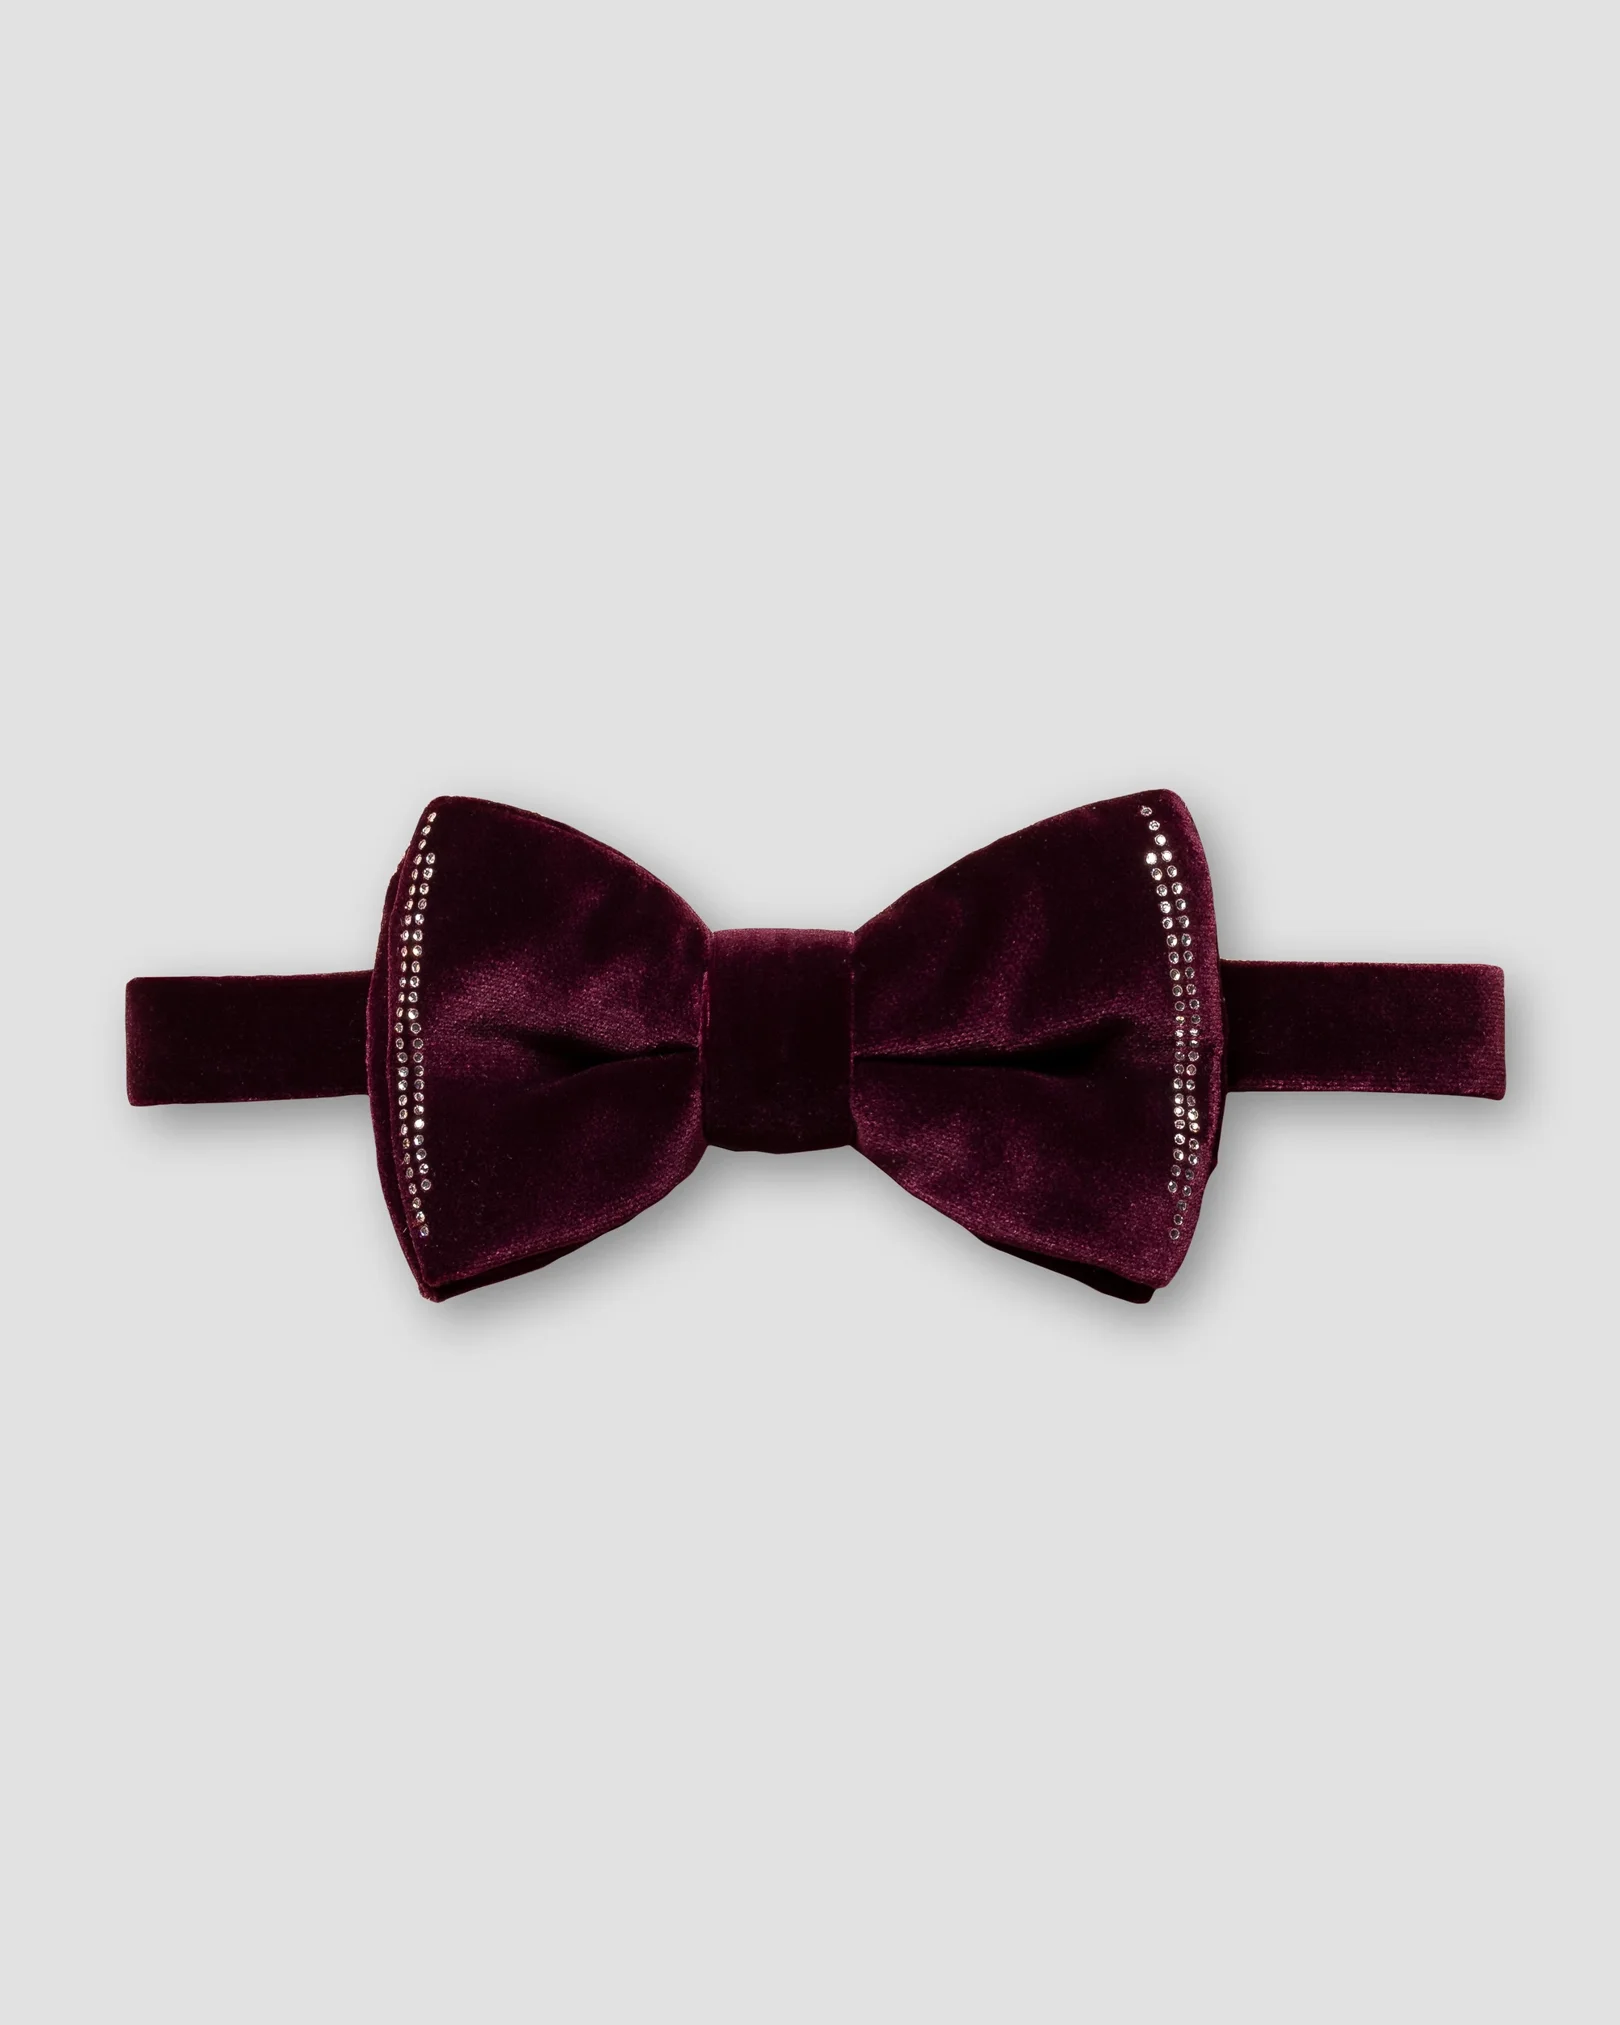 Eton - red velvet bow tie ready tied dressed